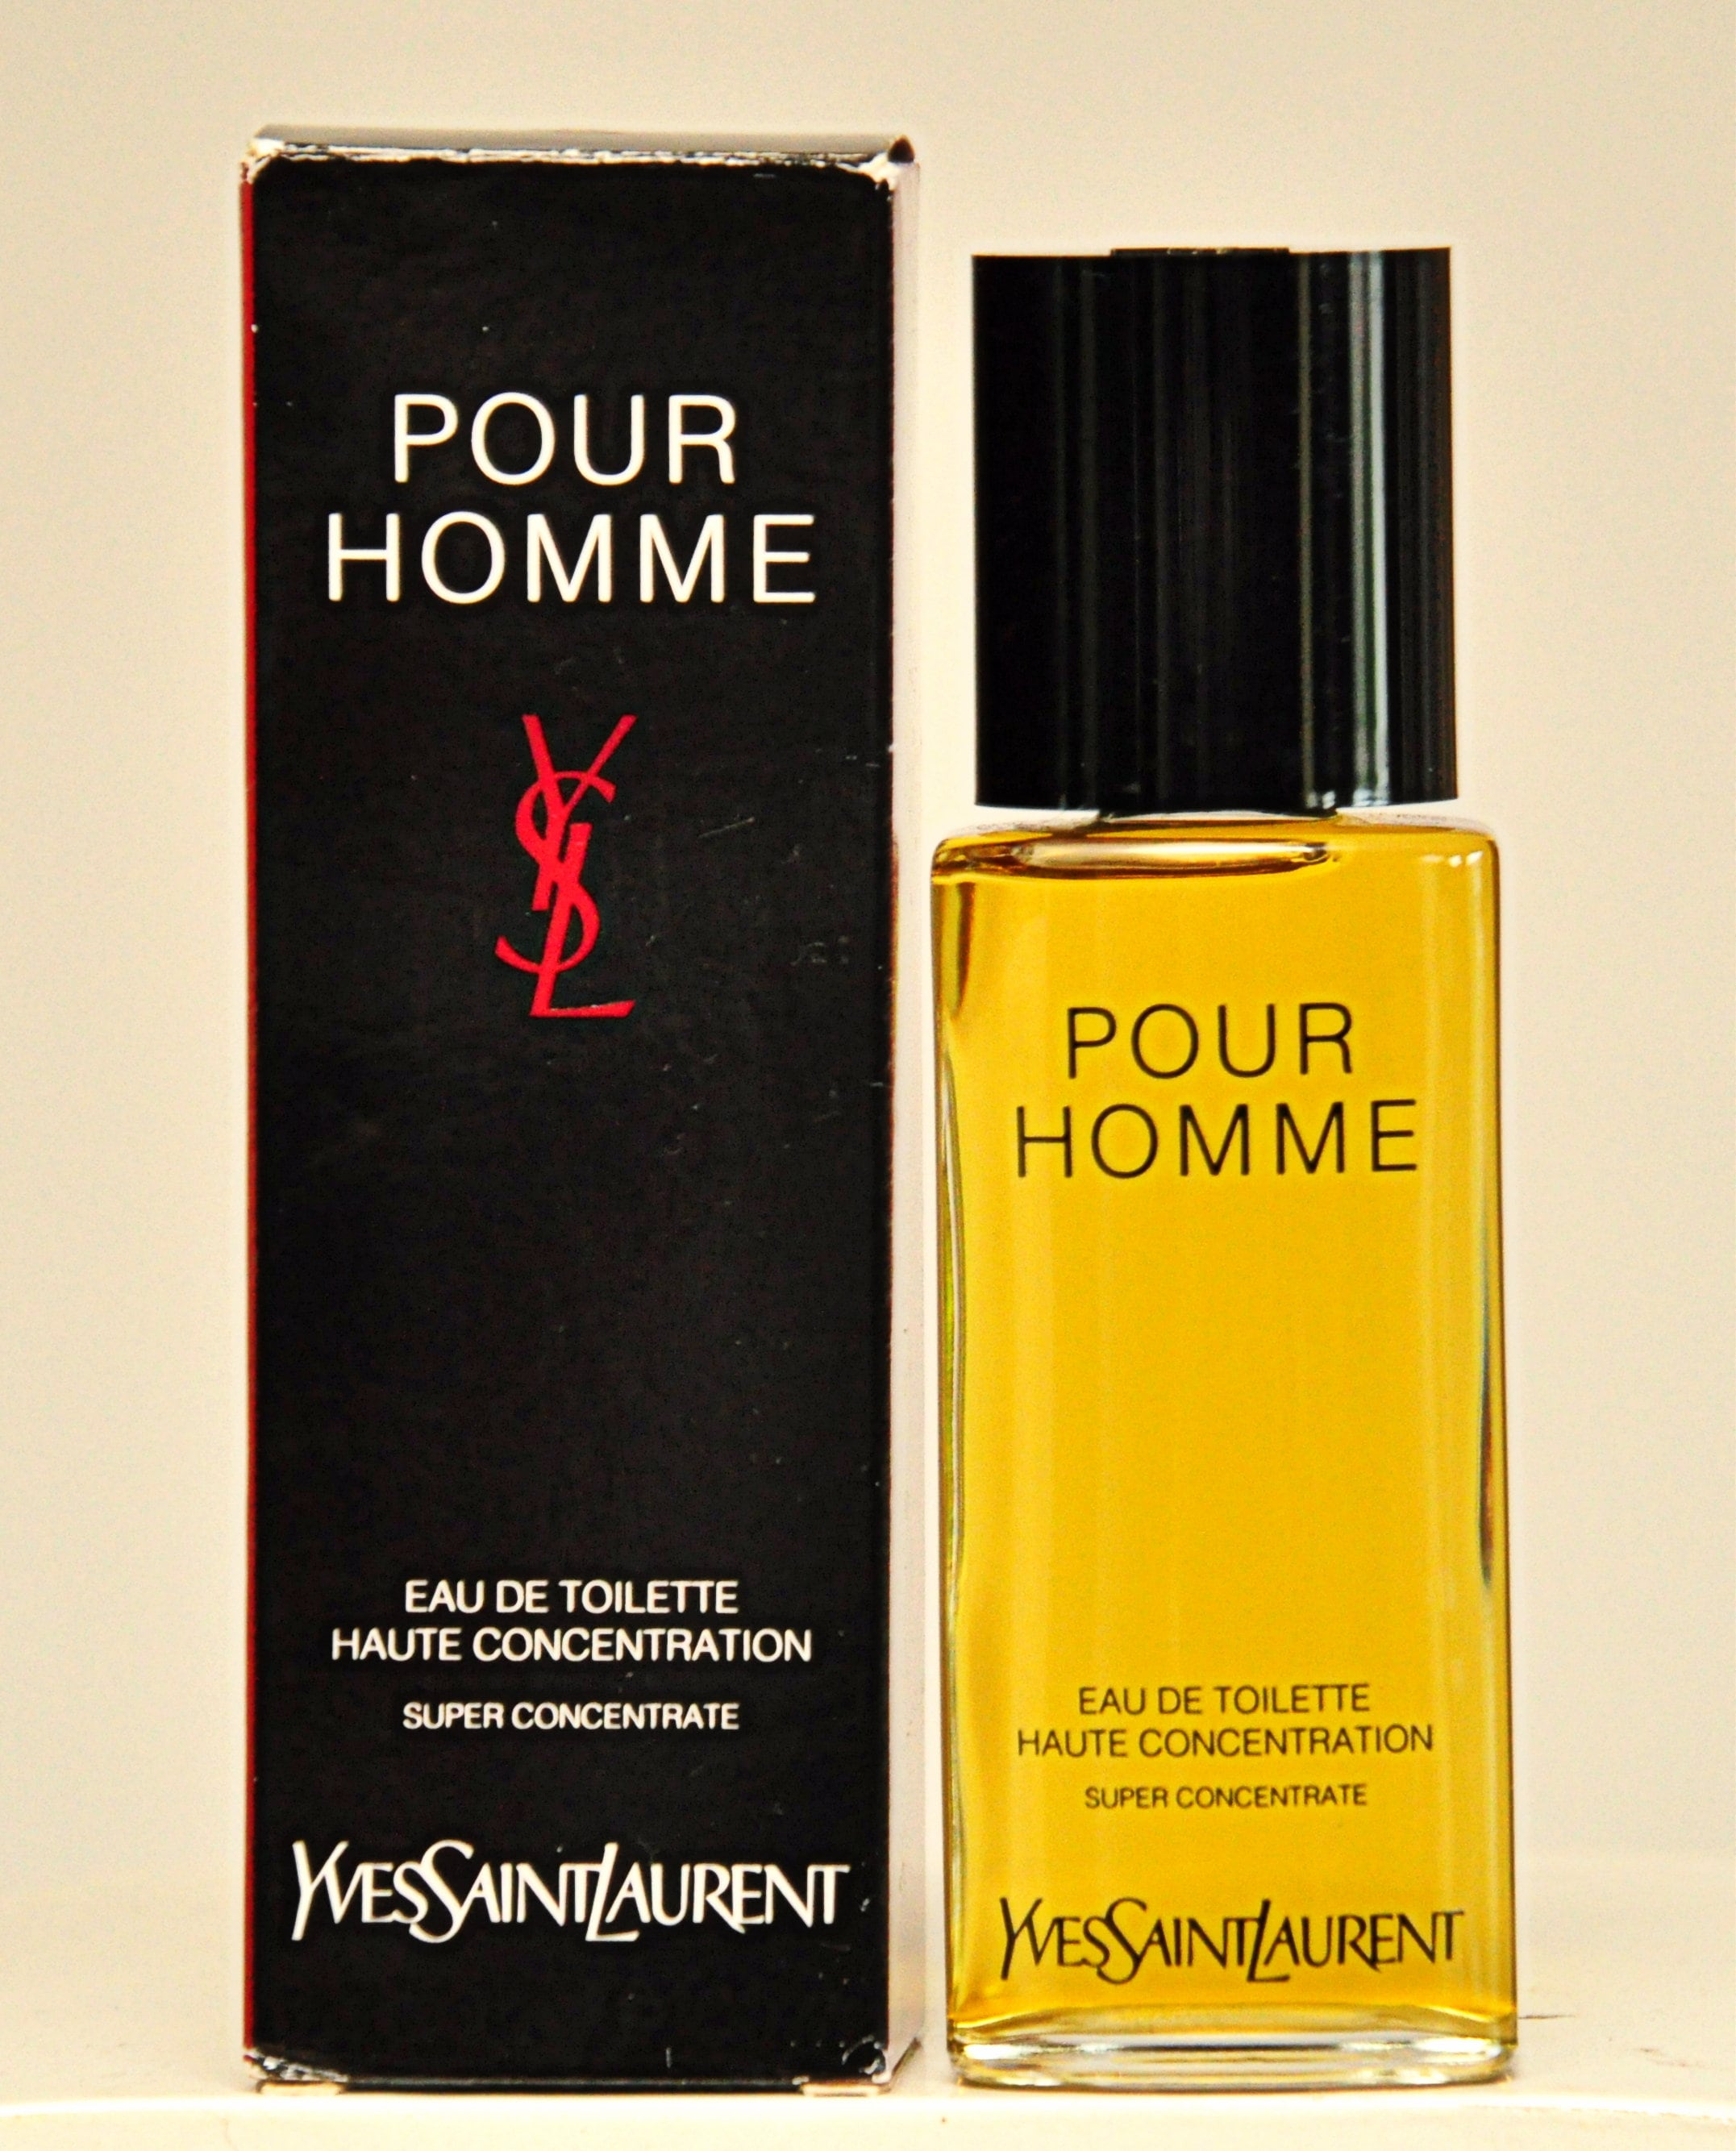 Yves Saint Laurent pour homme 50 ml vintage www.np.gov.lk